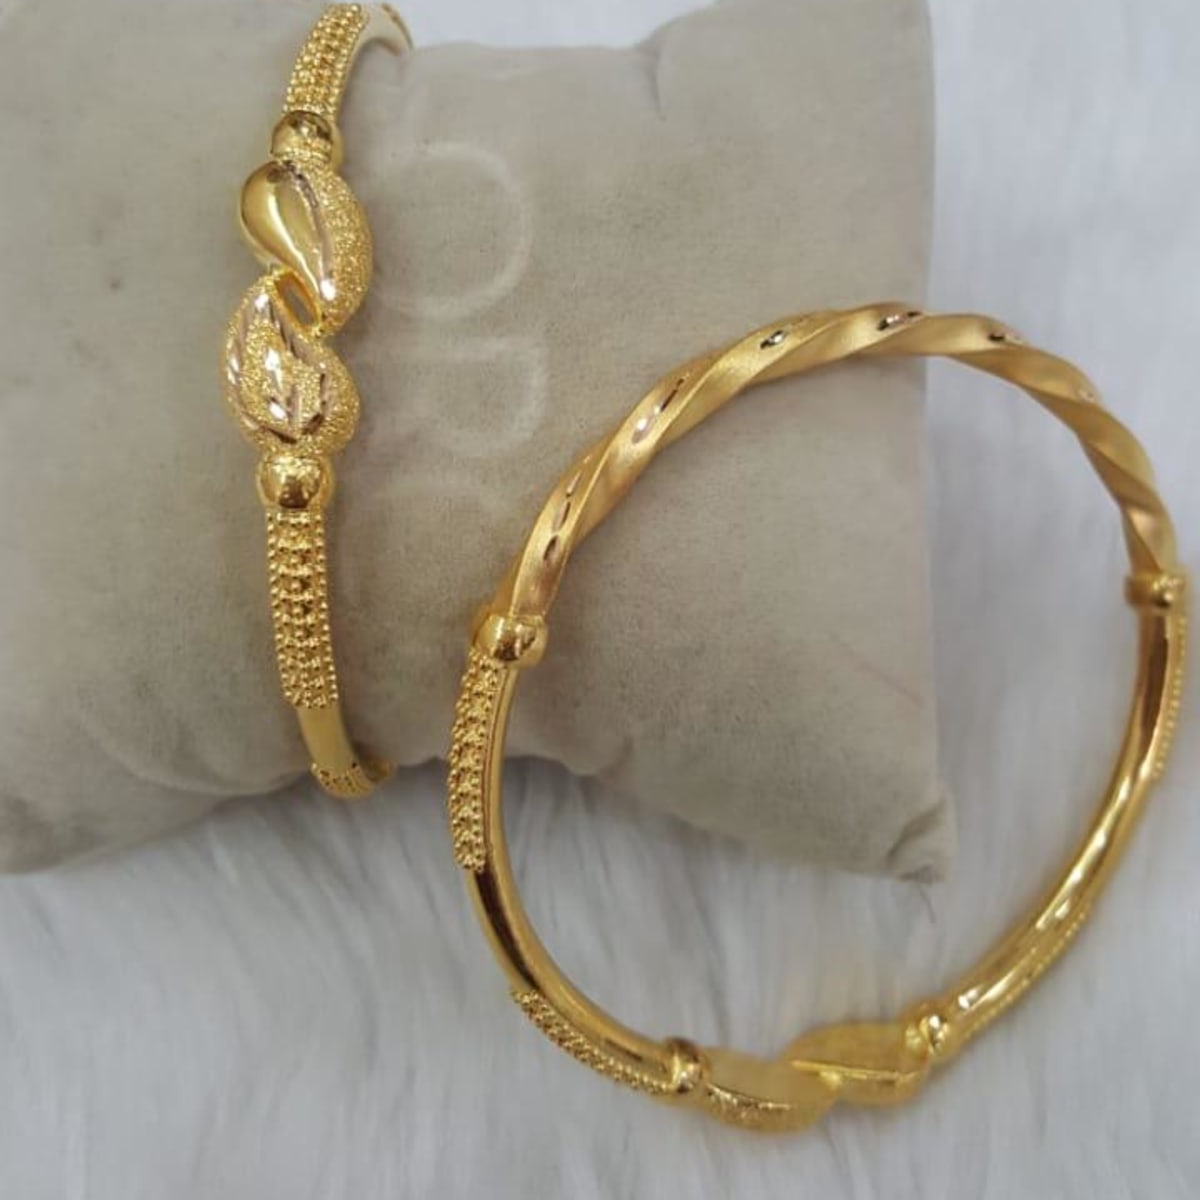 Buy Gold Fancy Bangles Online | Lal Thanga Maligai - JewelFlix